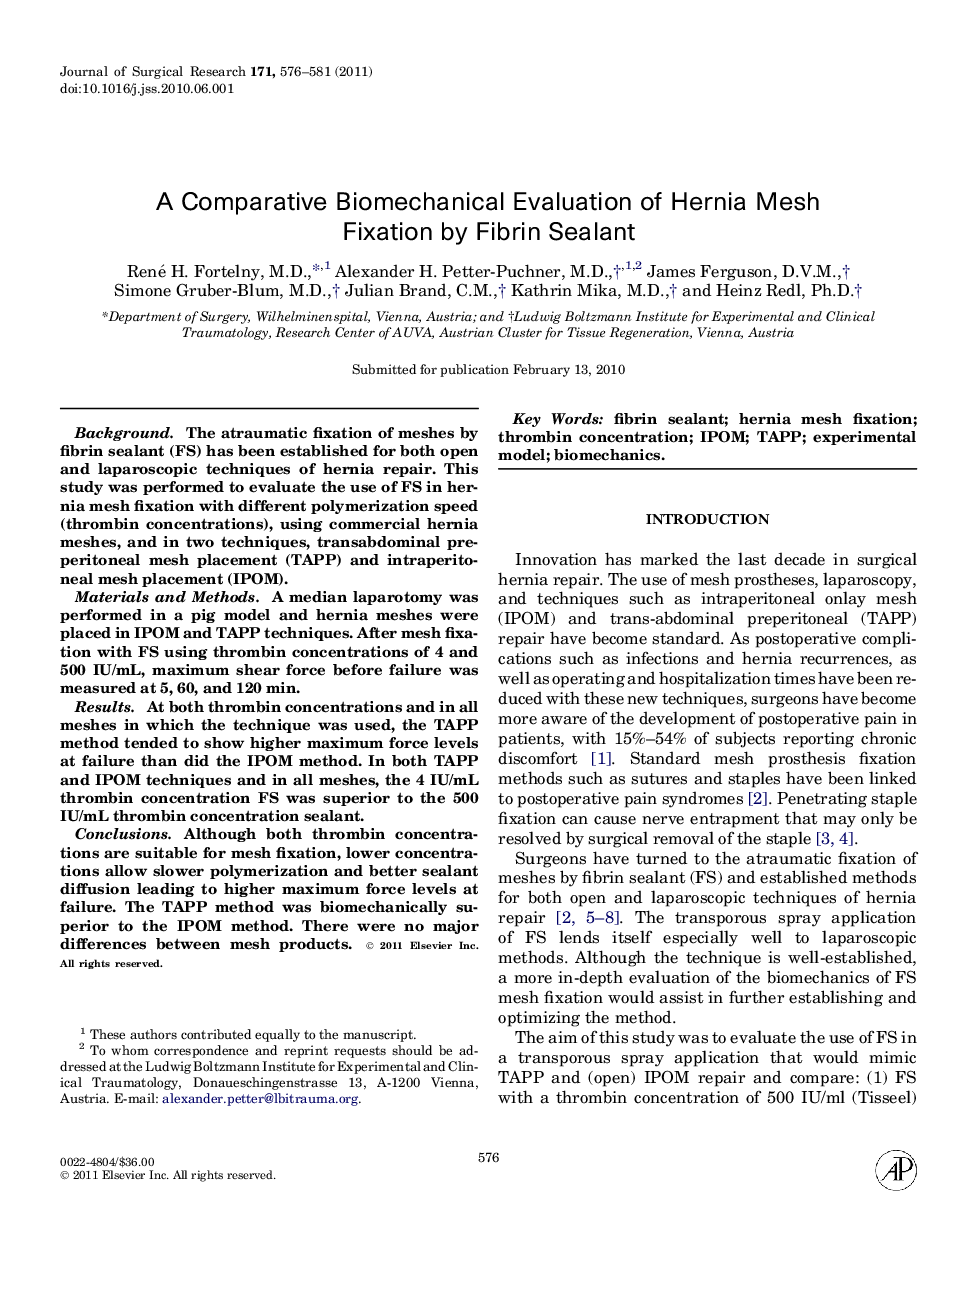 A Comparative Biomechanical Evaluation of Hernia Mesh Fixation by Fibrin Sealant